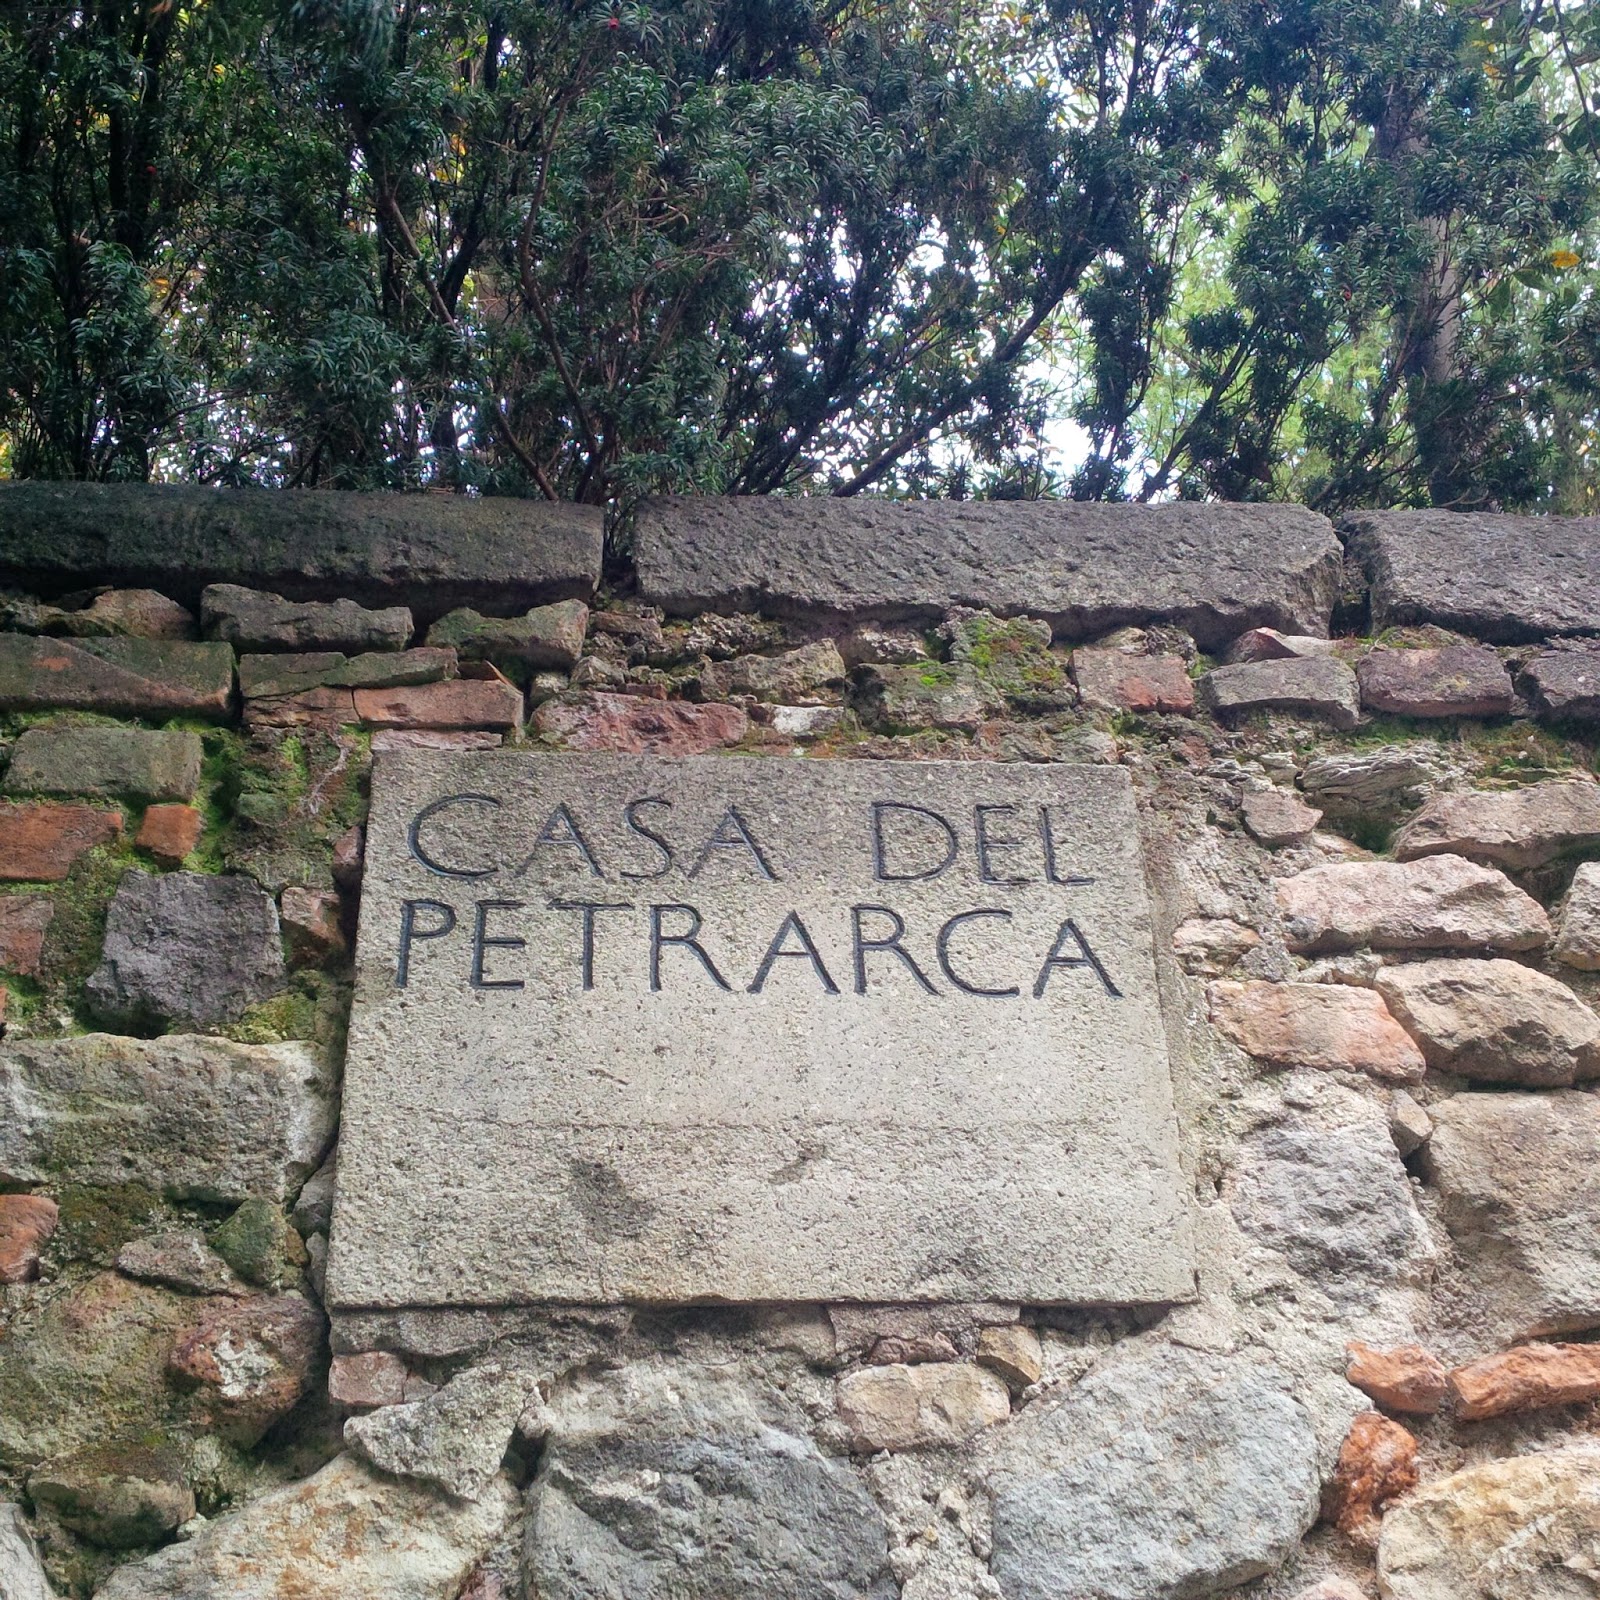 The sign on Casa del Petrarca in Arqua Petrarca